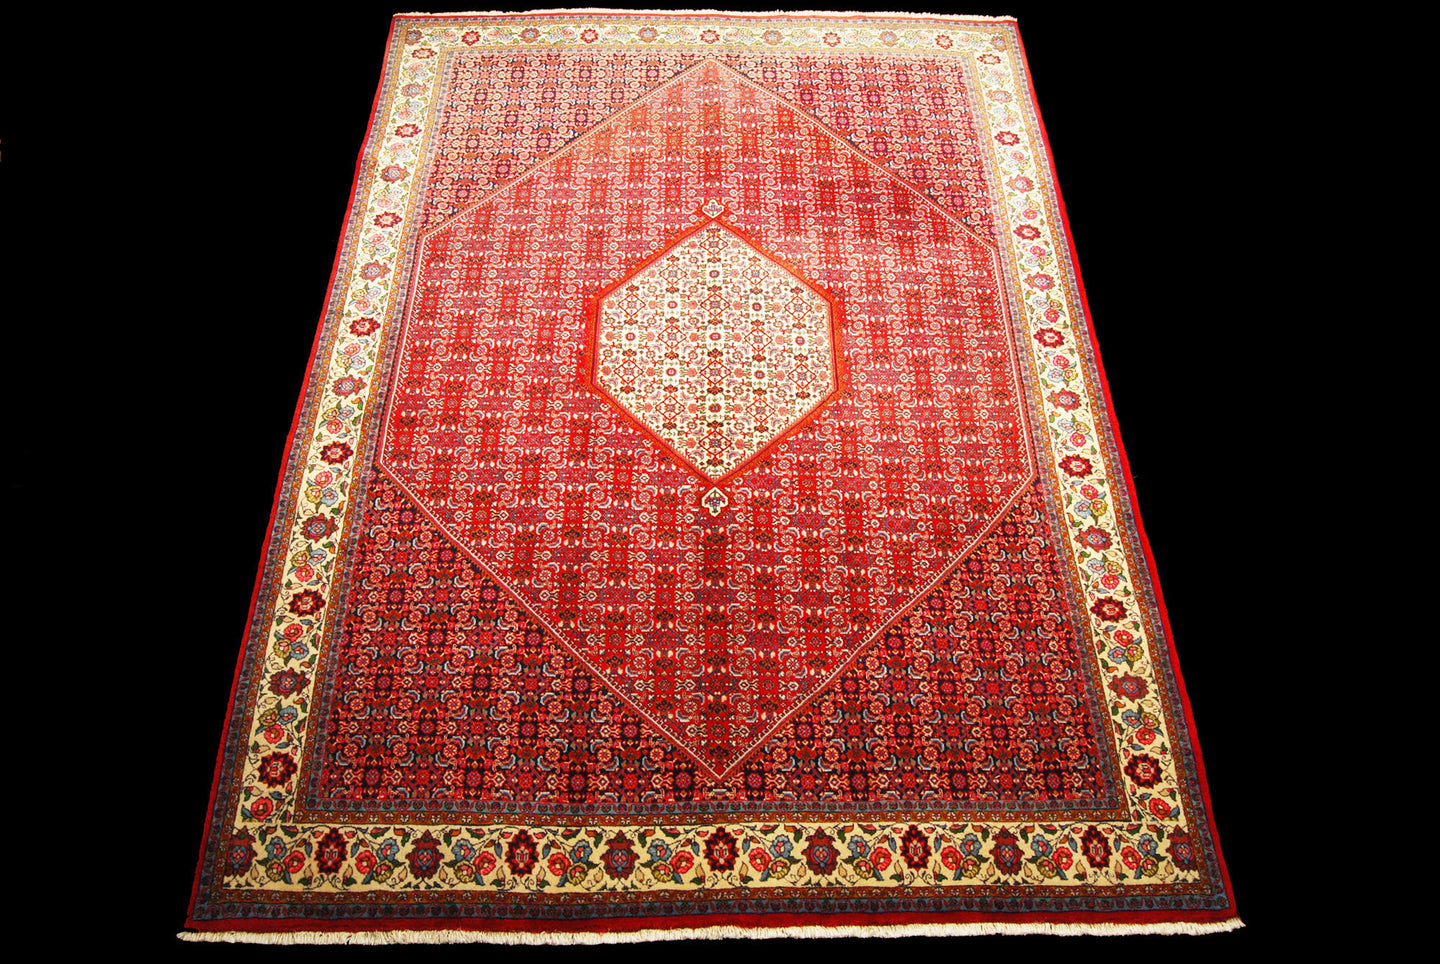 Authentic original hand knotted carpet 340x250 CM